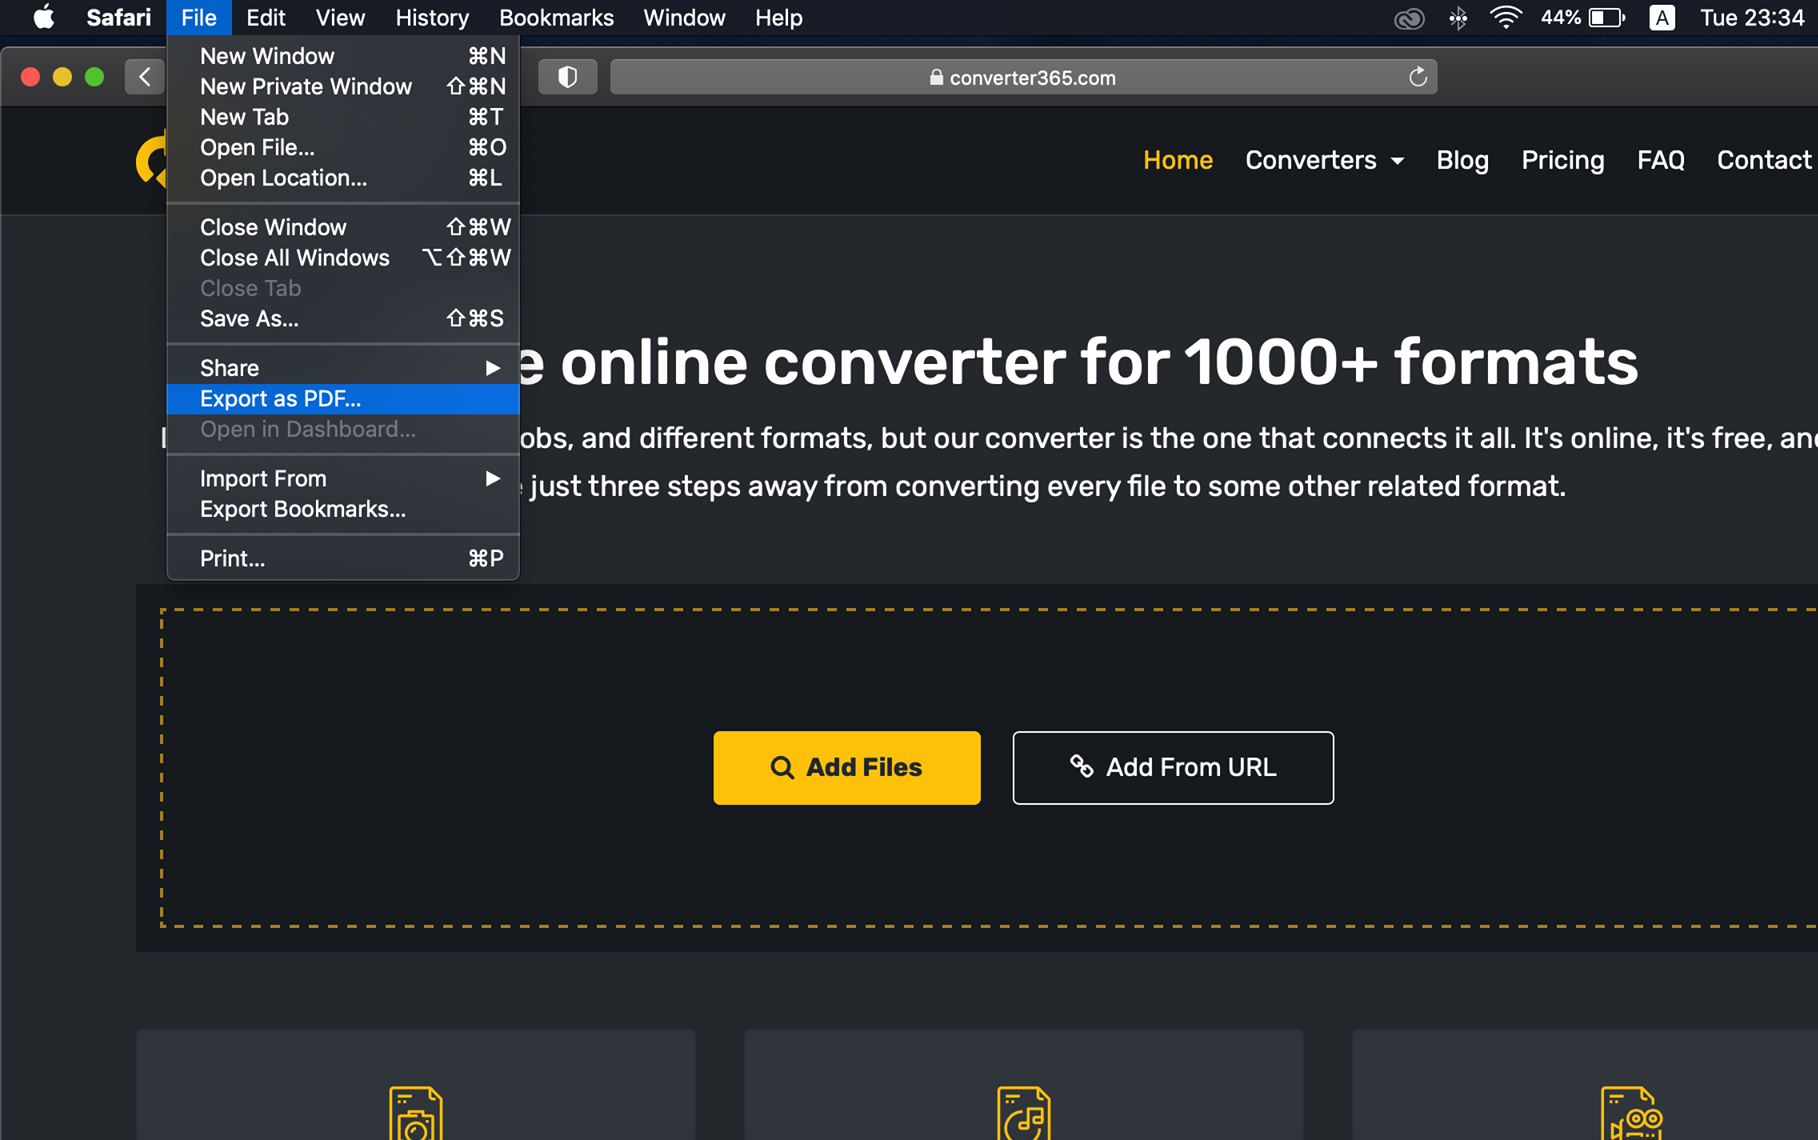 how to convert website to pdf - safari